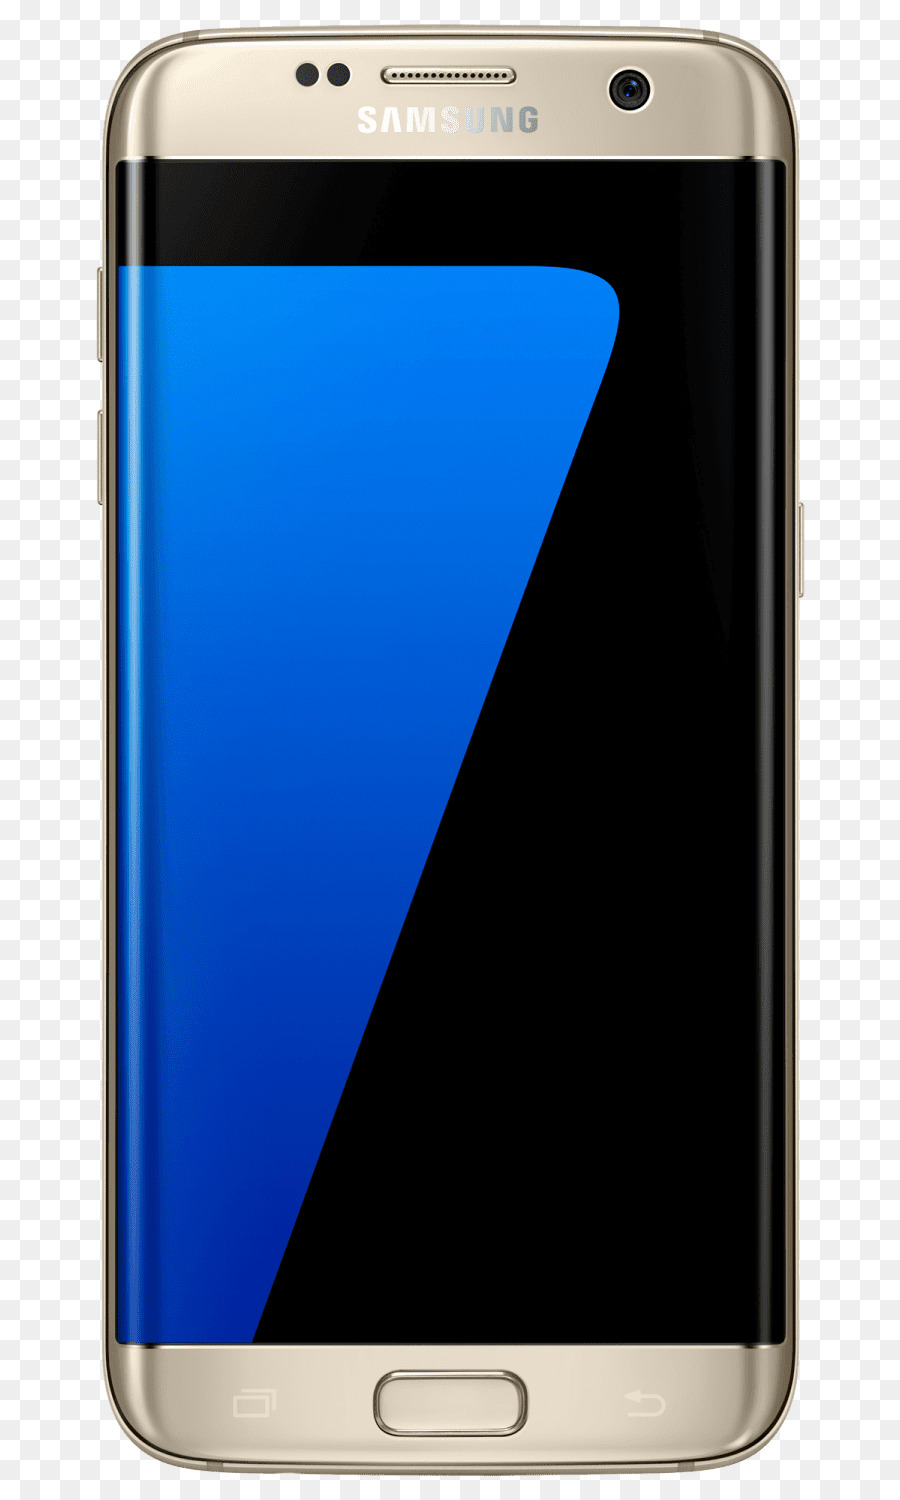 Samsung Galaxy S Plus 4G Android-Telefon - Galaxy S7 Edge